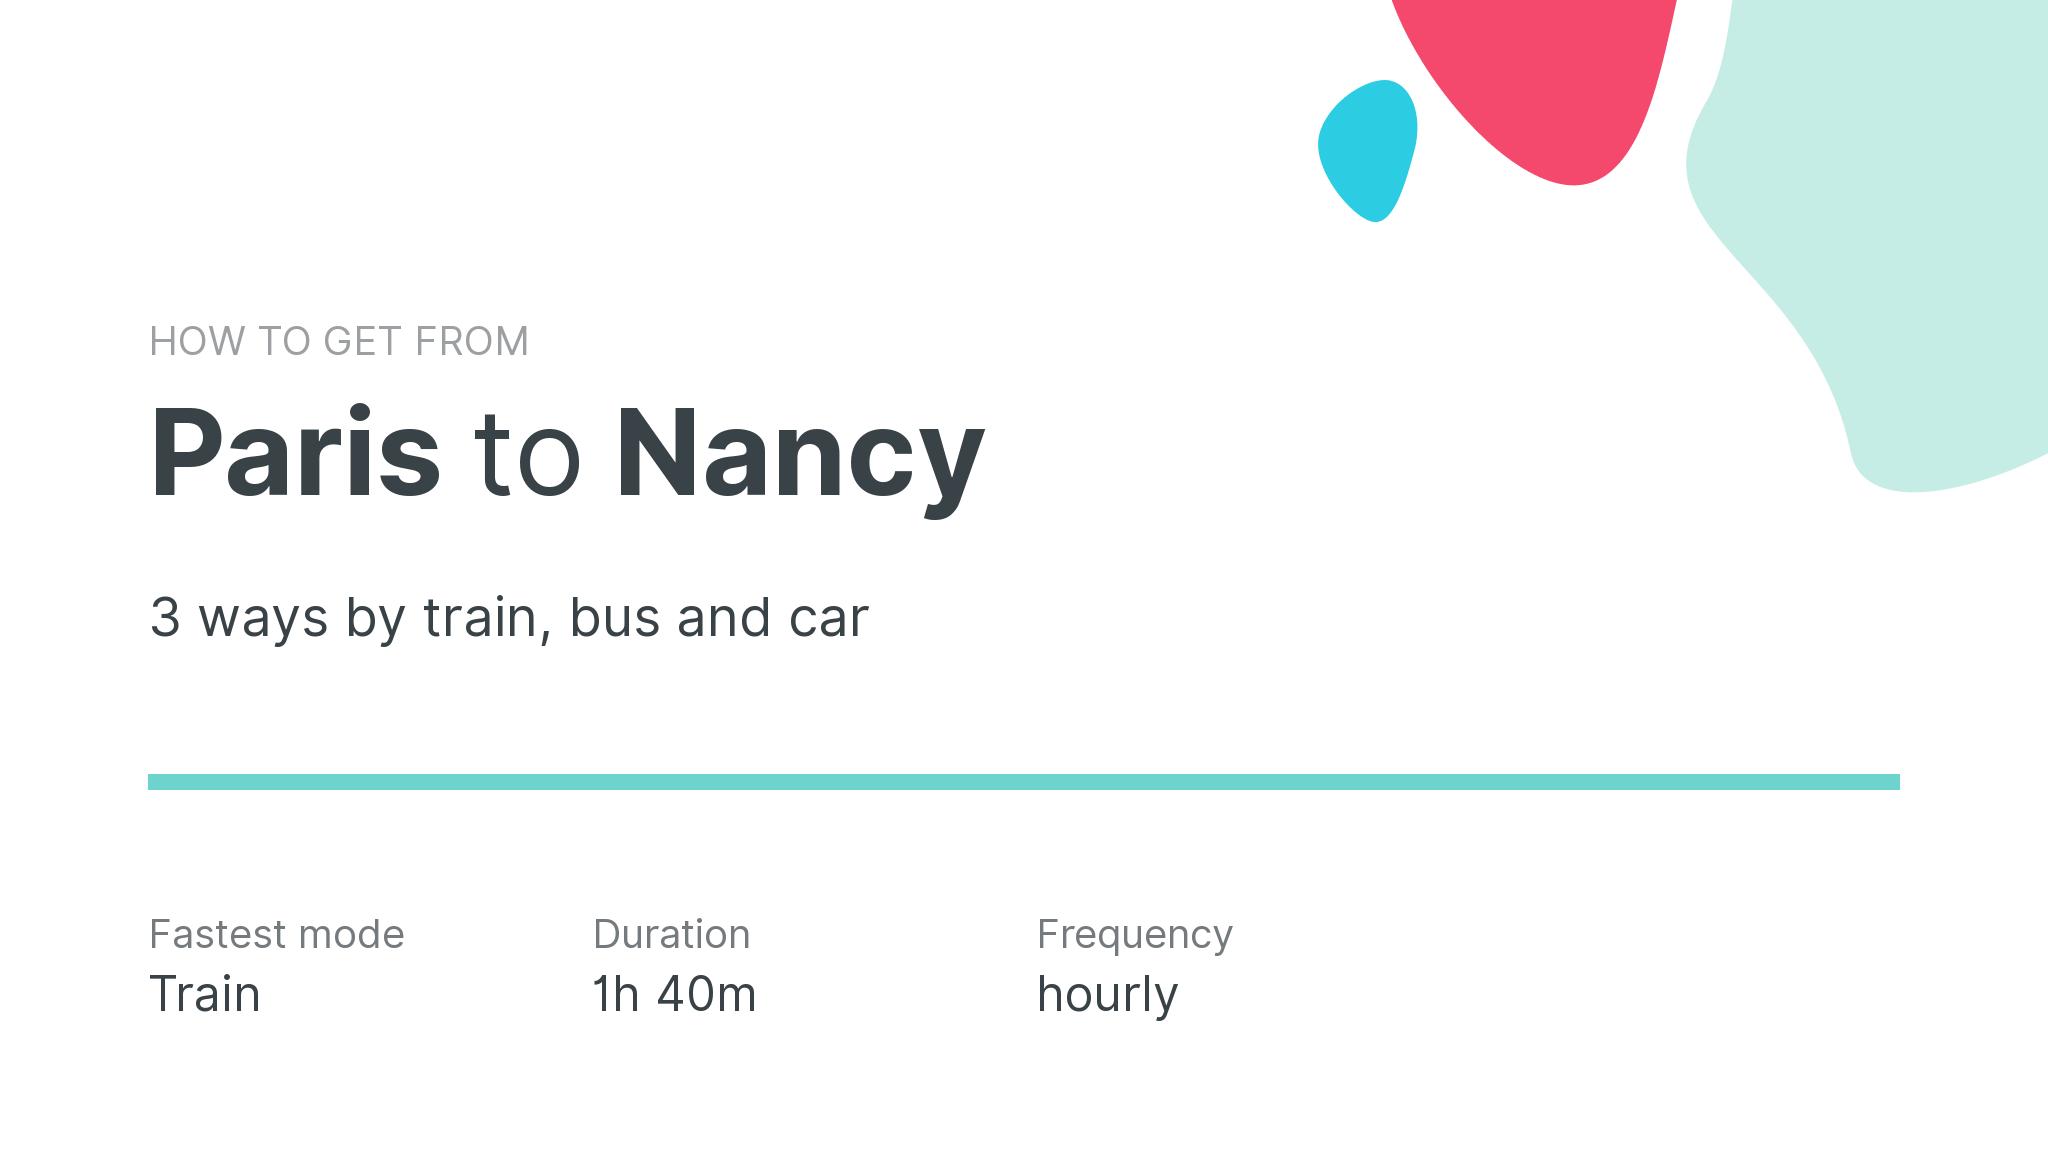 How do I get from Paris to Nancy